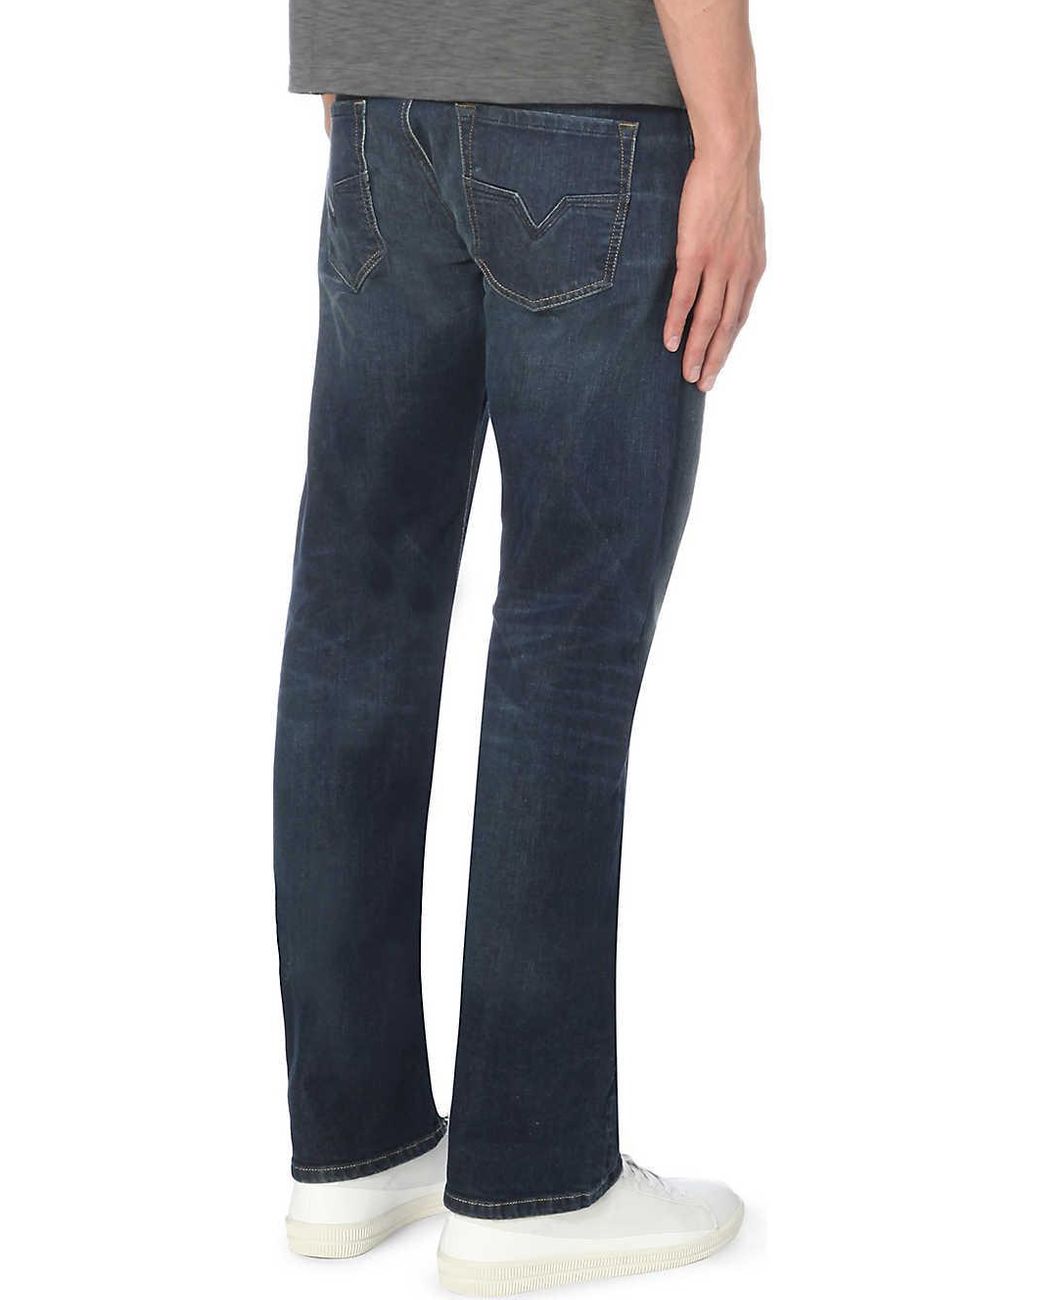 DIESEL Men's Blue Larkee 0853r Straight Jeans for Men | Lyst Canada